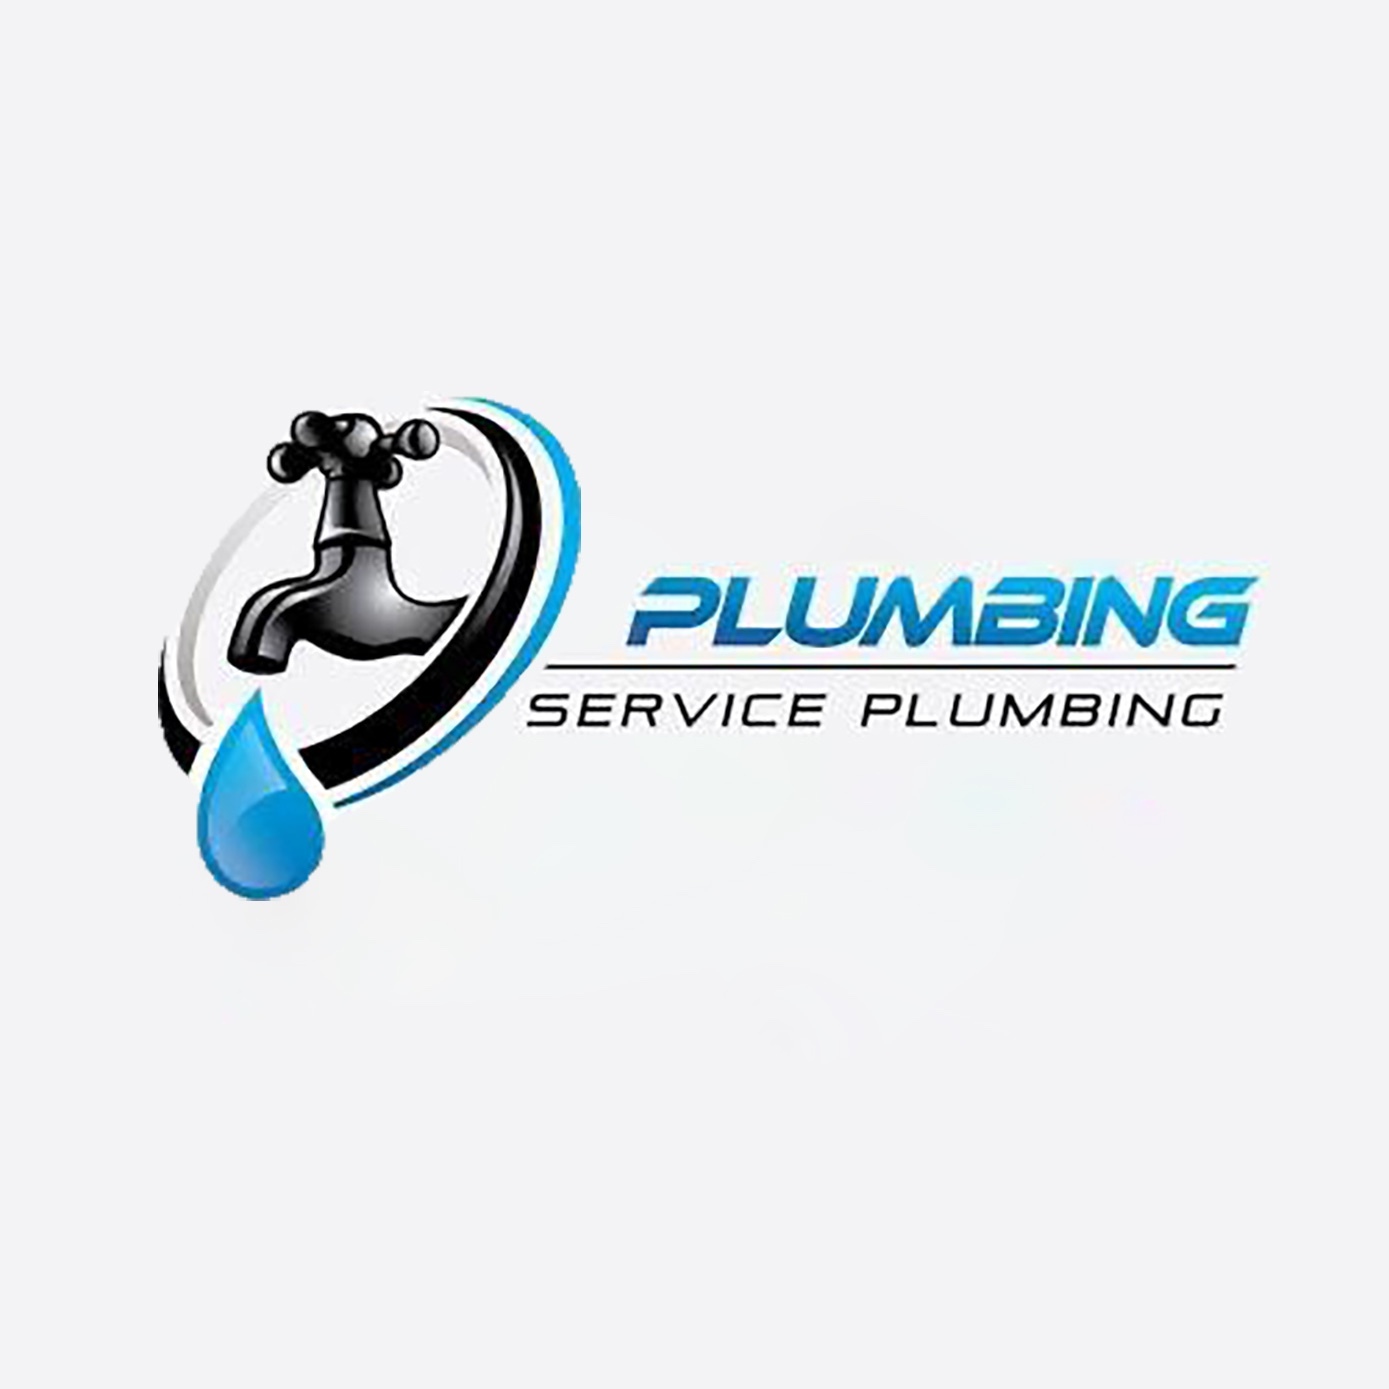 Success Ocean Plumbing's logo